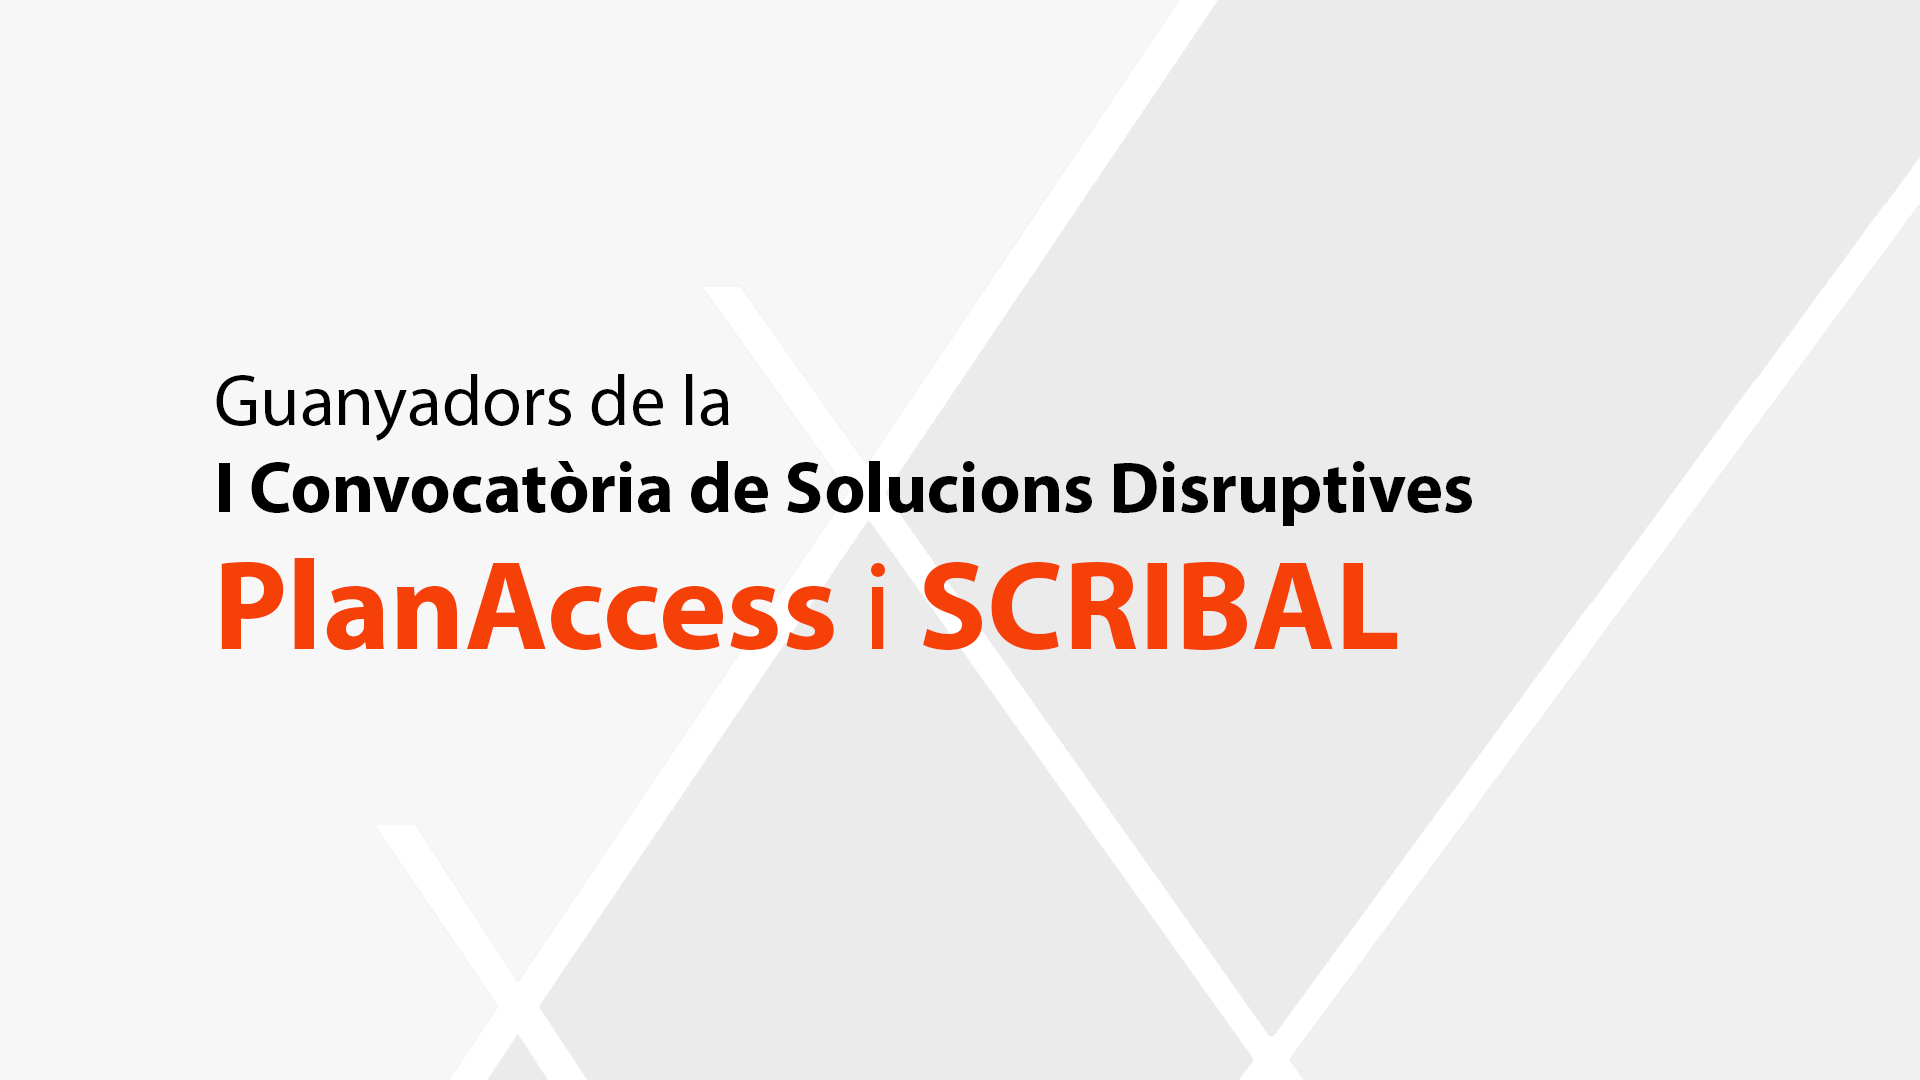 Accessibility Solutions Awards, resolución de la 1a Convocatoria de soluciones disruptivas de la Red AccessCat